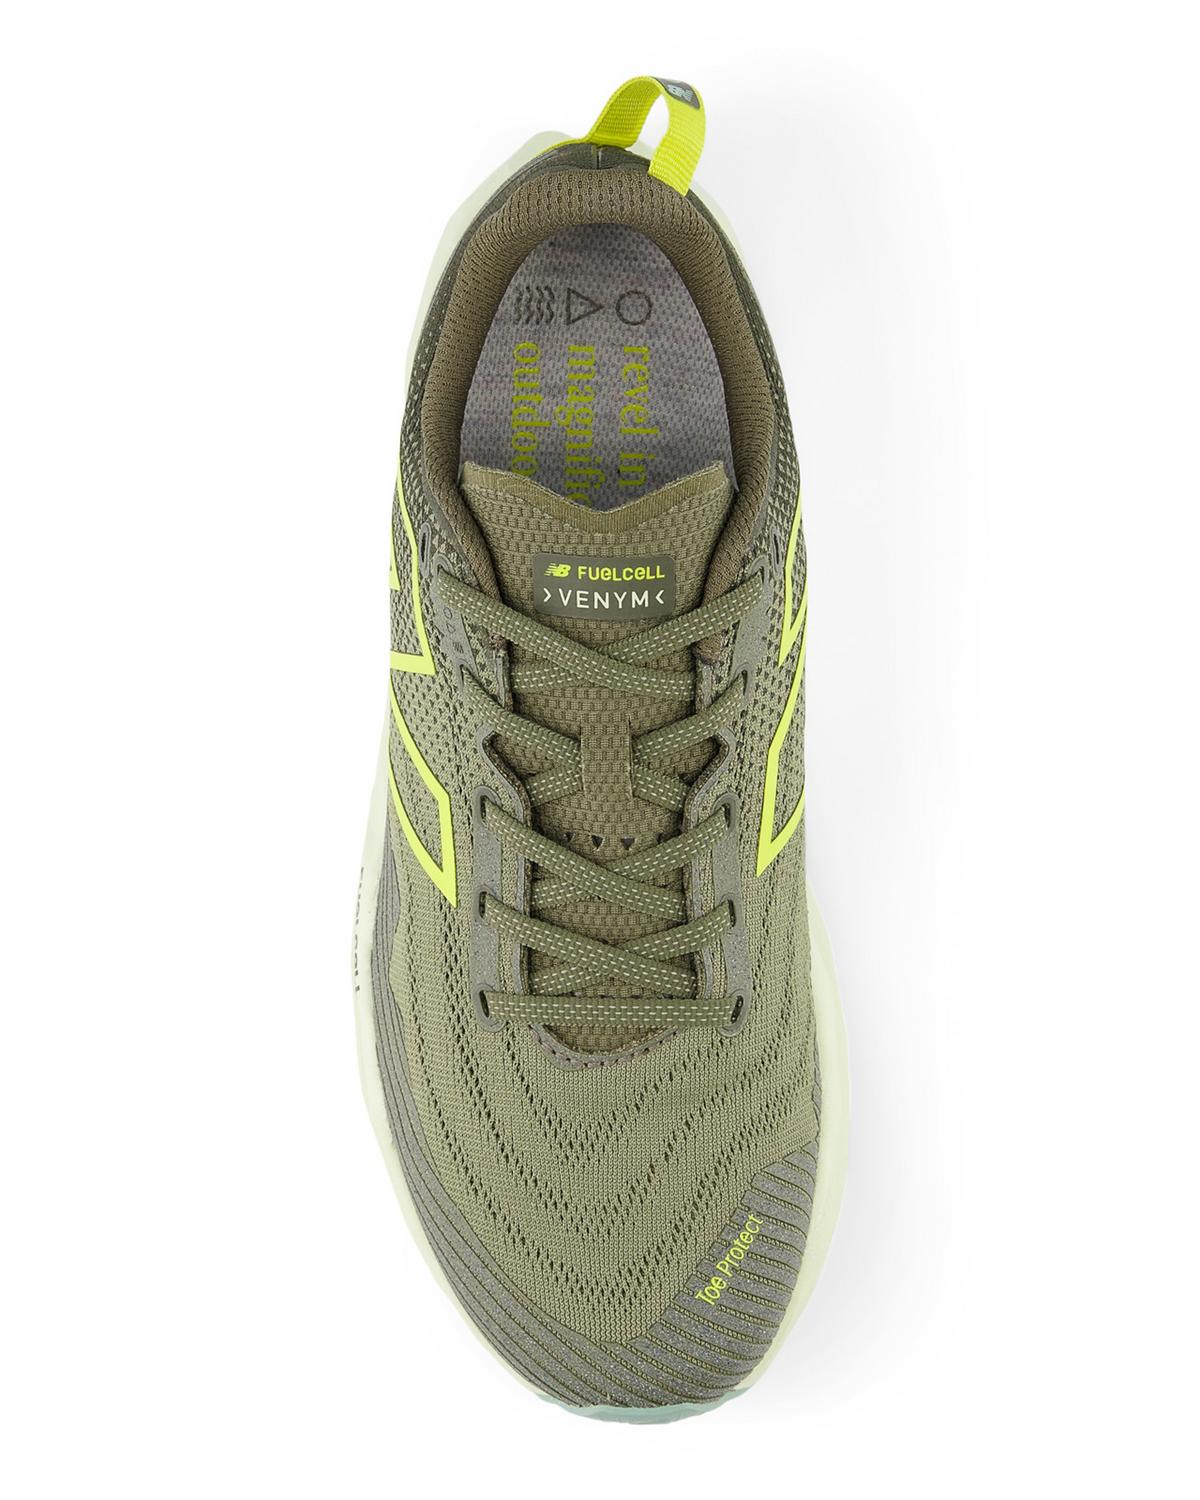 New Balance Men's FUELCELL VENYM V1 Trail Running Shoes -  Dark Olive